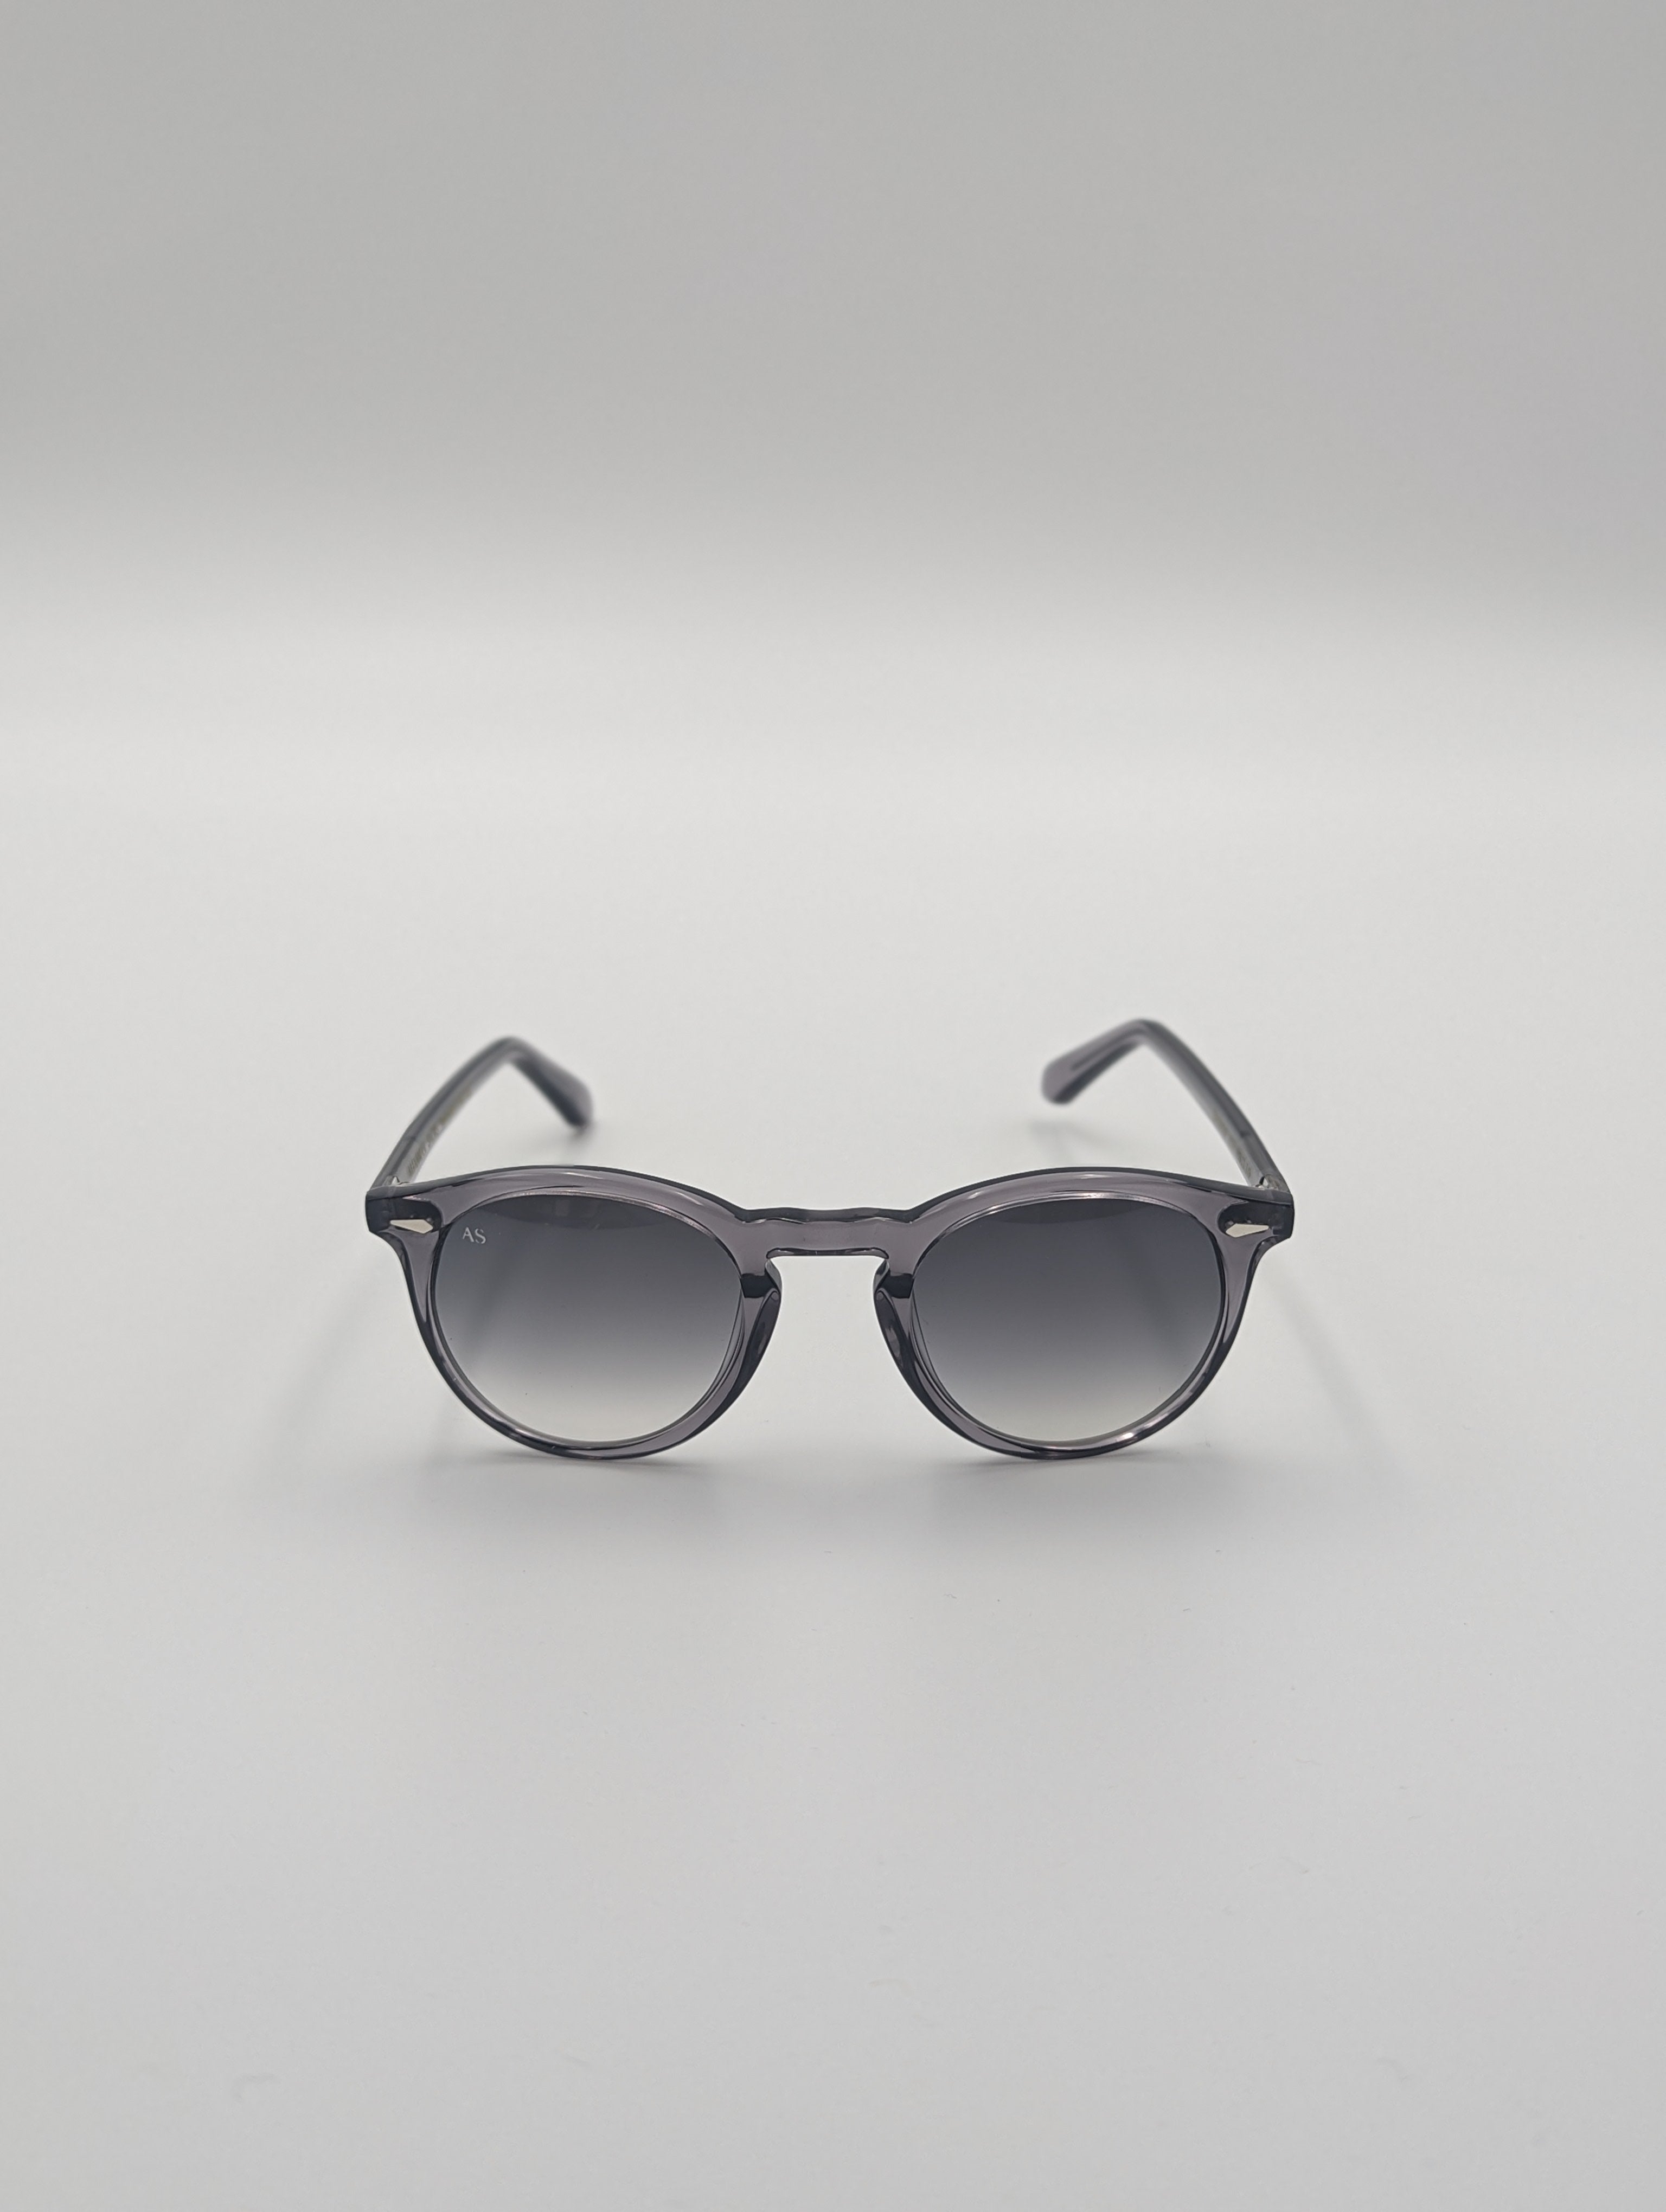 Sunglasses Iconic - Grey